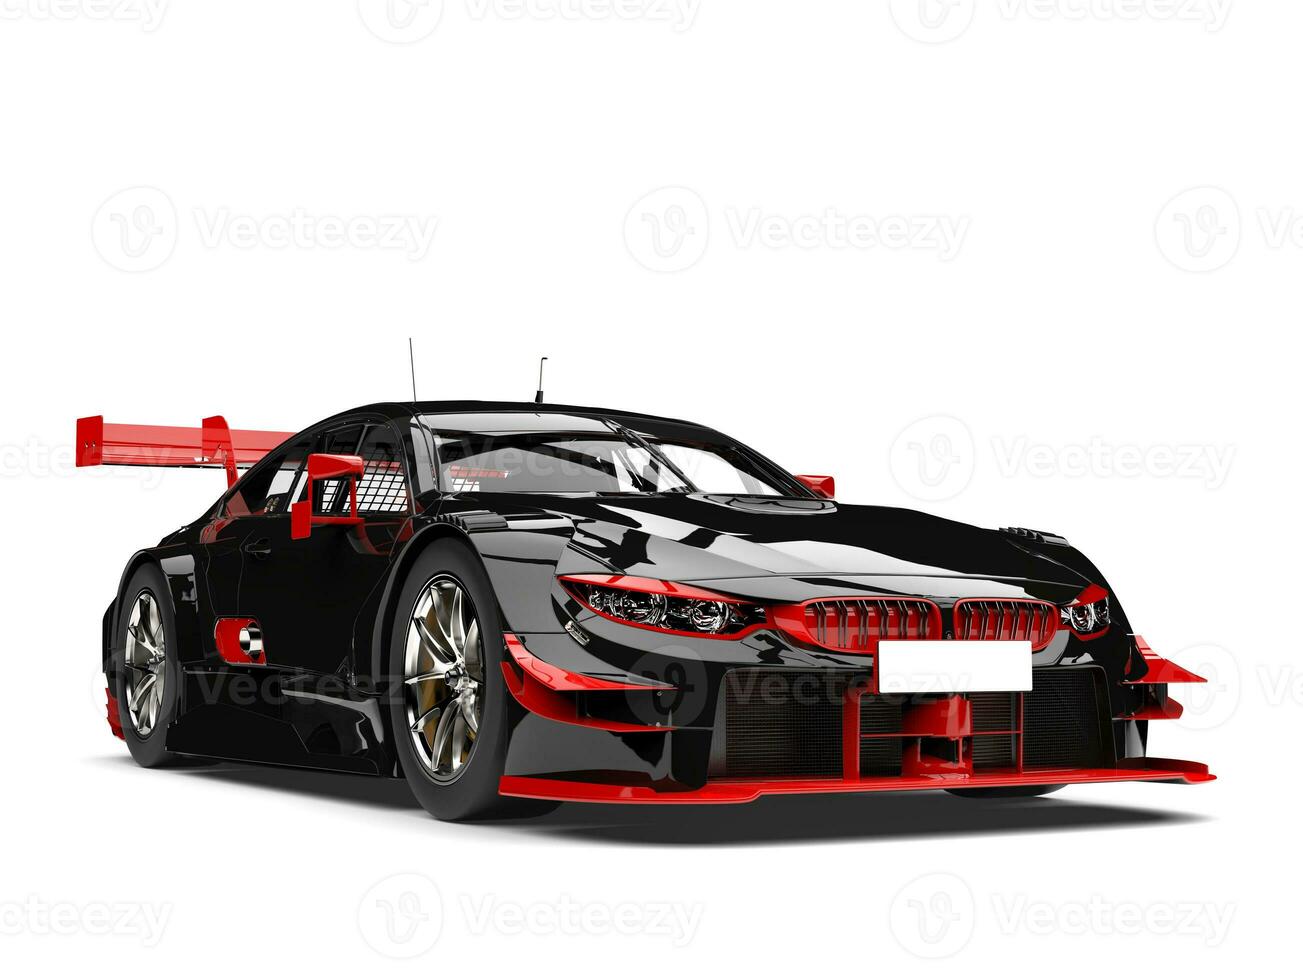 increíble oscuro carreras coche con rojo detalles foto